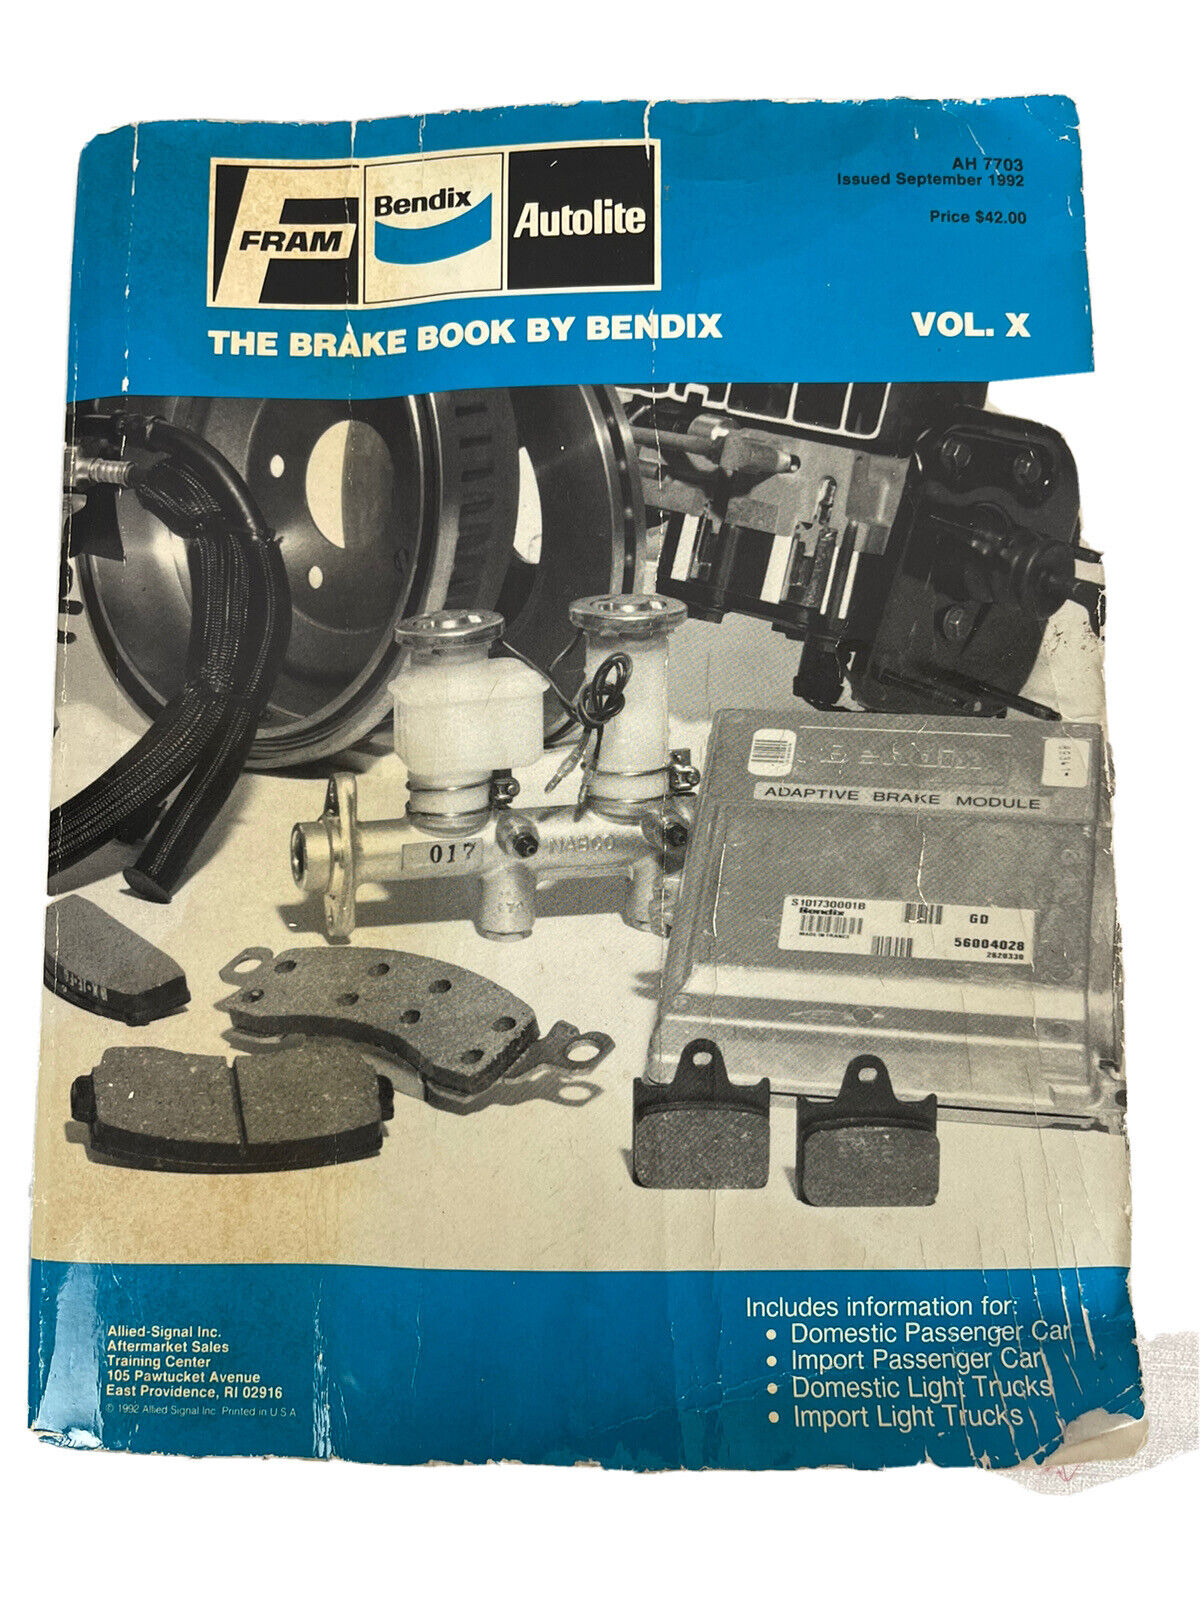 VTG The Brake Book Vol X By Bendix Domestic Import Passenger Cars Trucks 1992